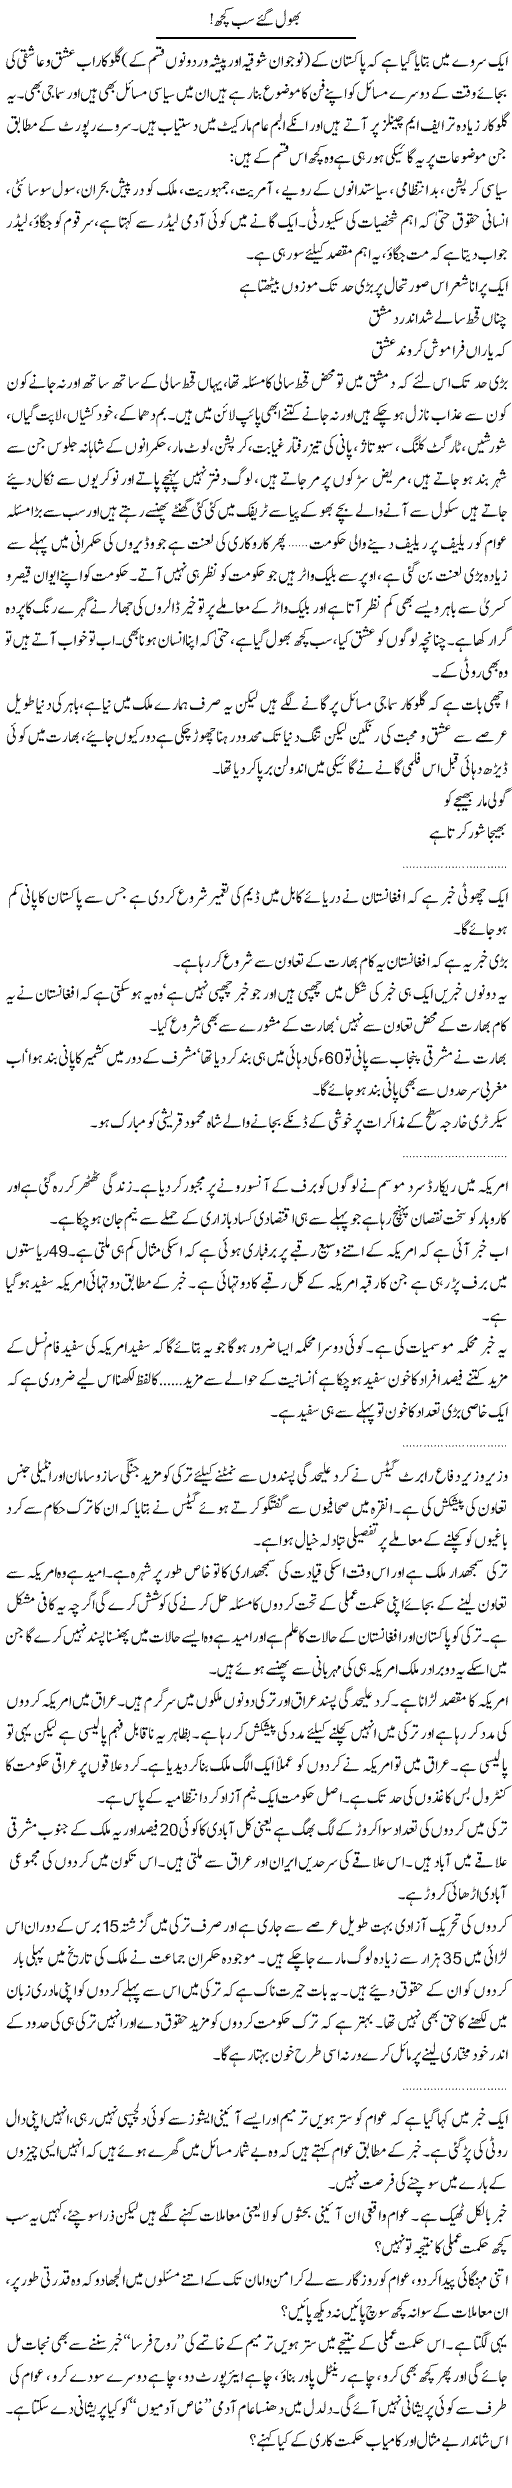 Bhol gae sab Express Column Abdullah Tariq 16 Feb 2010